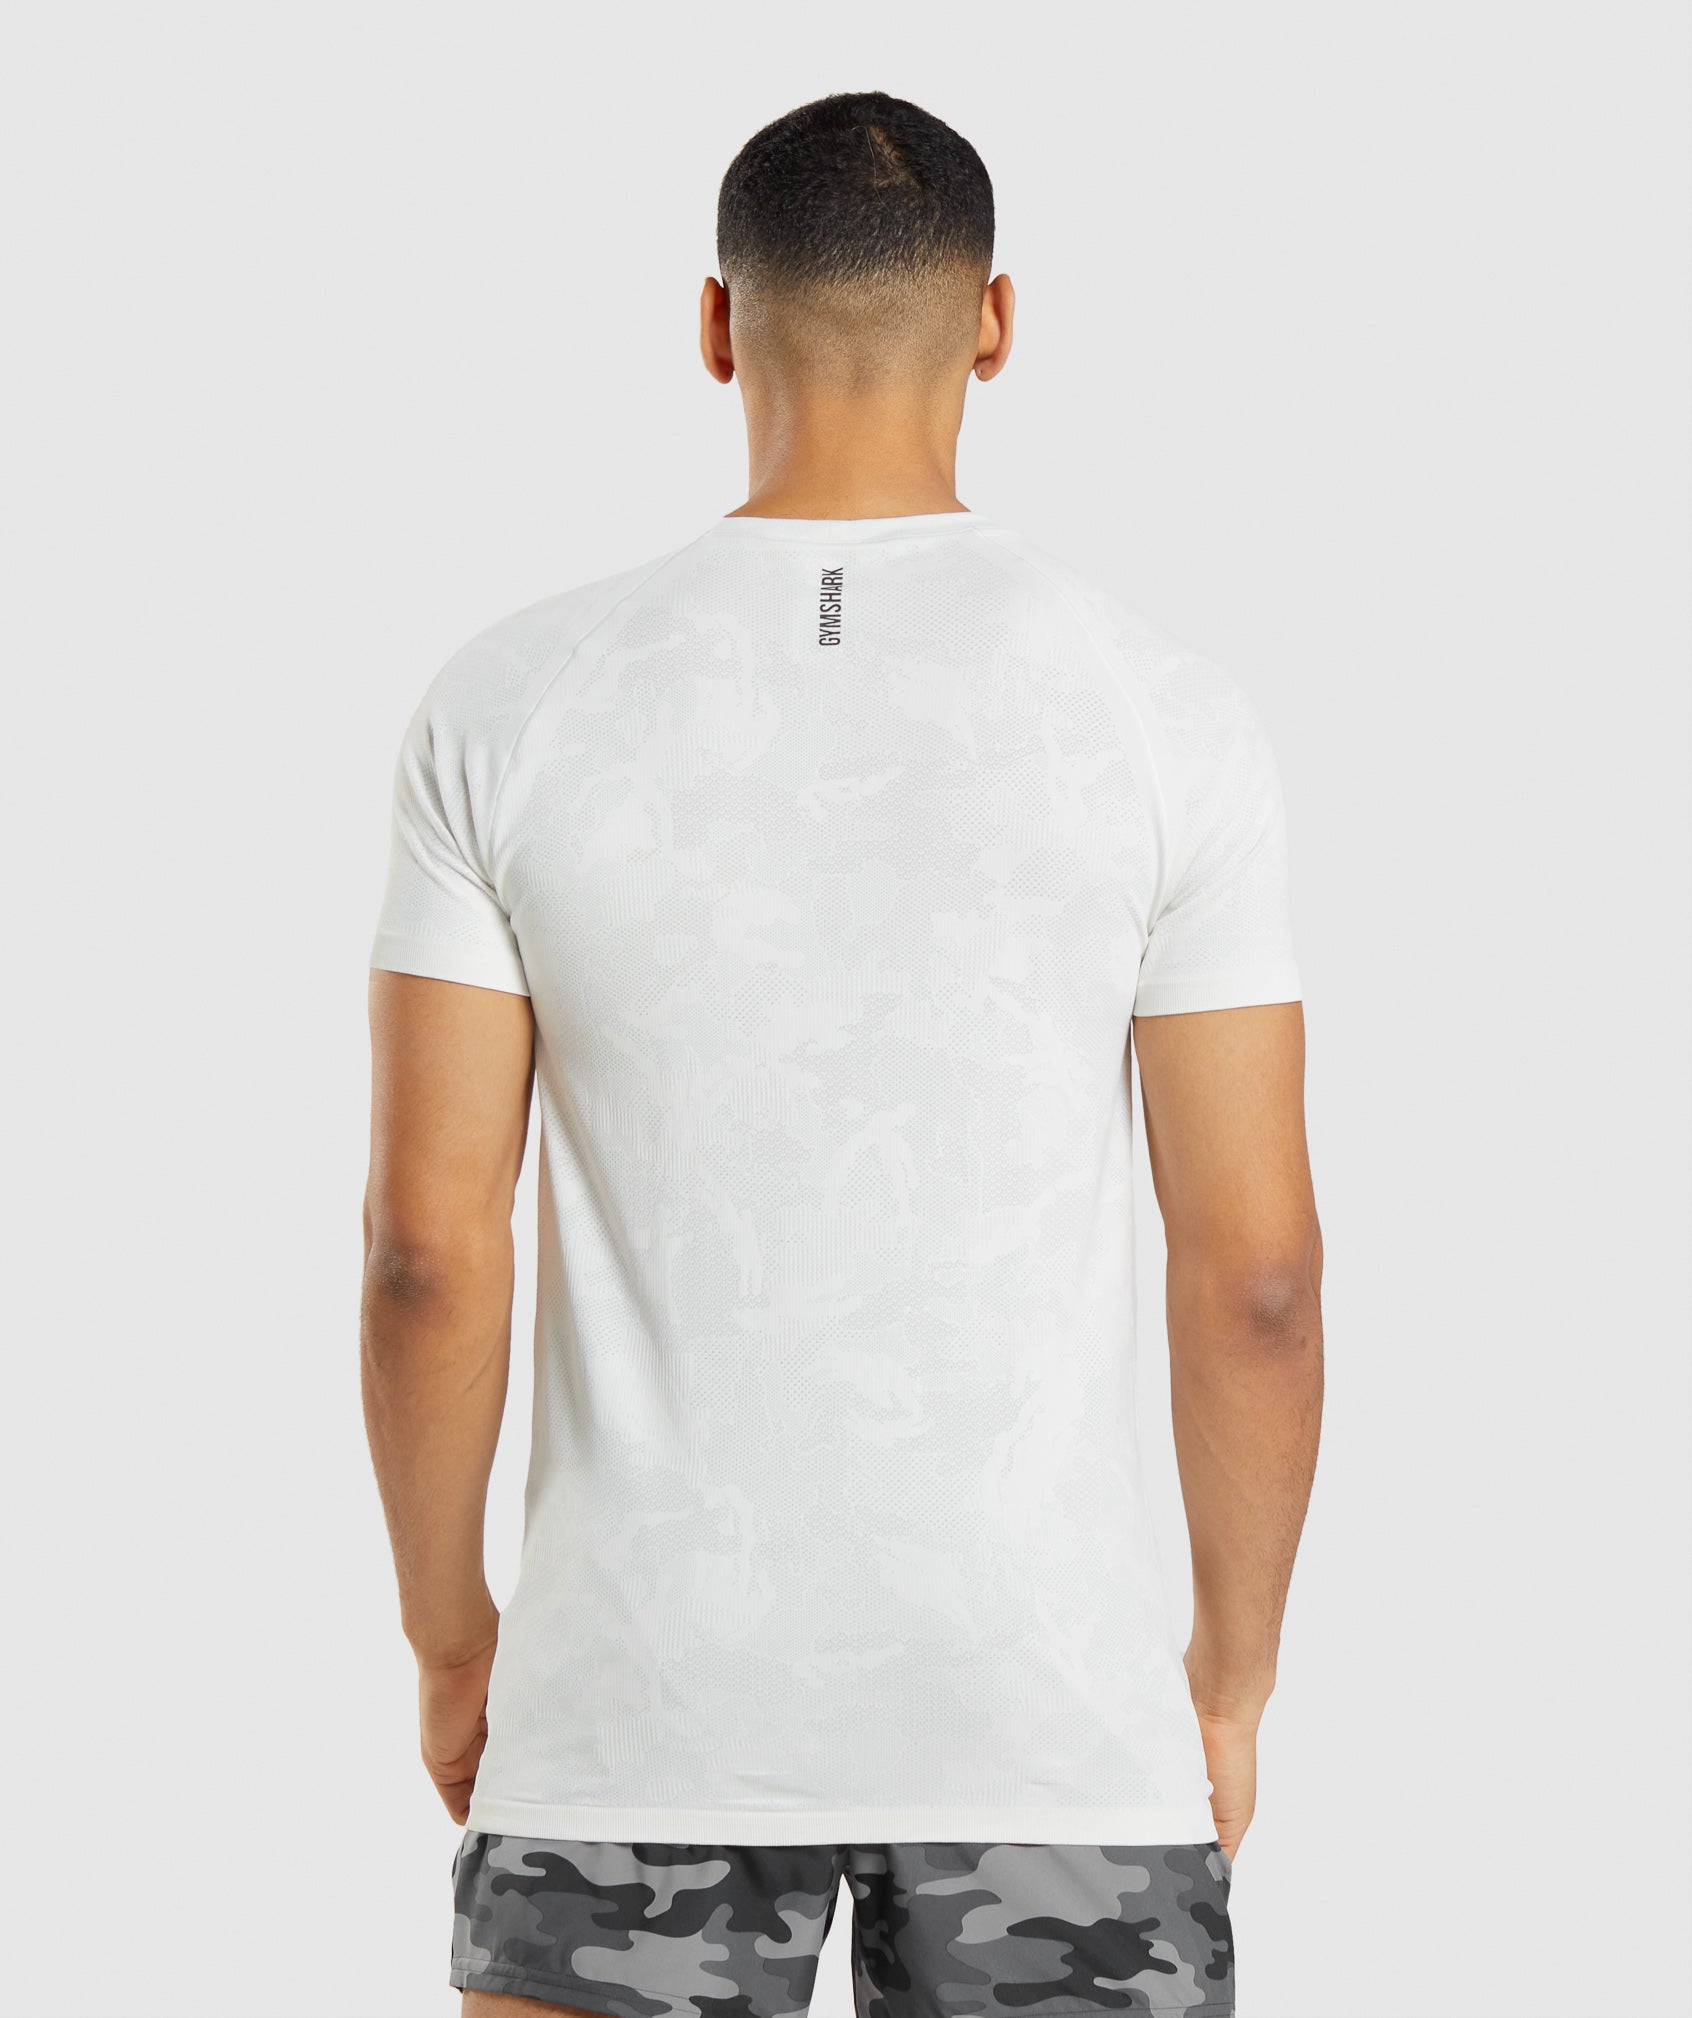 Geo Seamless T-Shirt in White/Light Grey - view 2